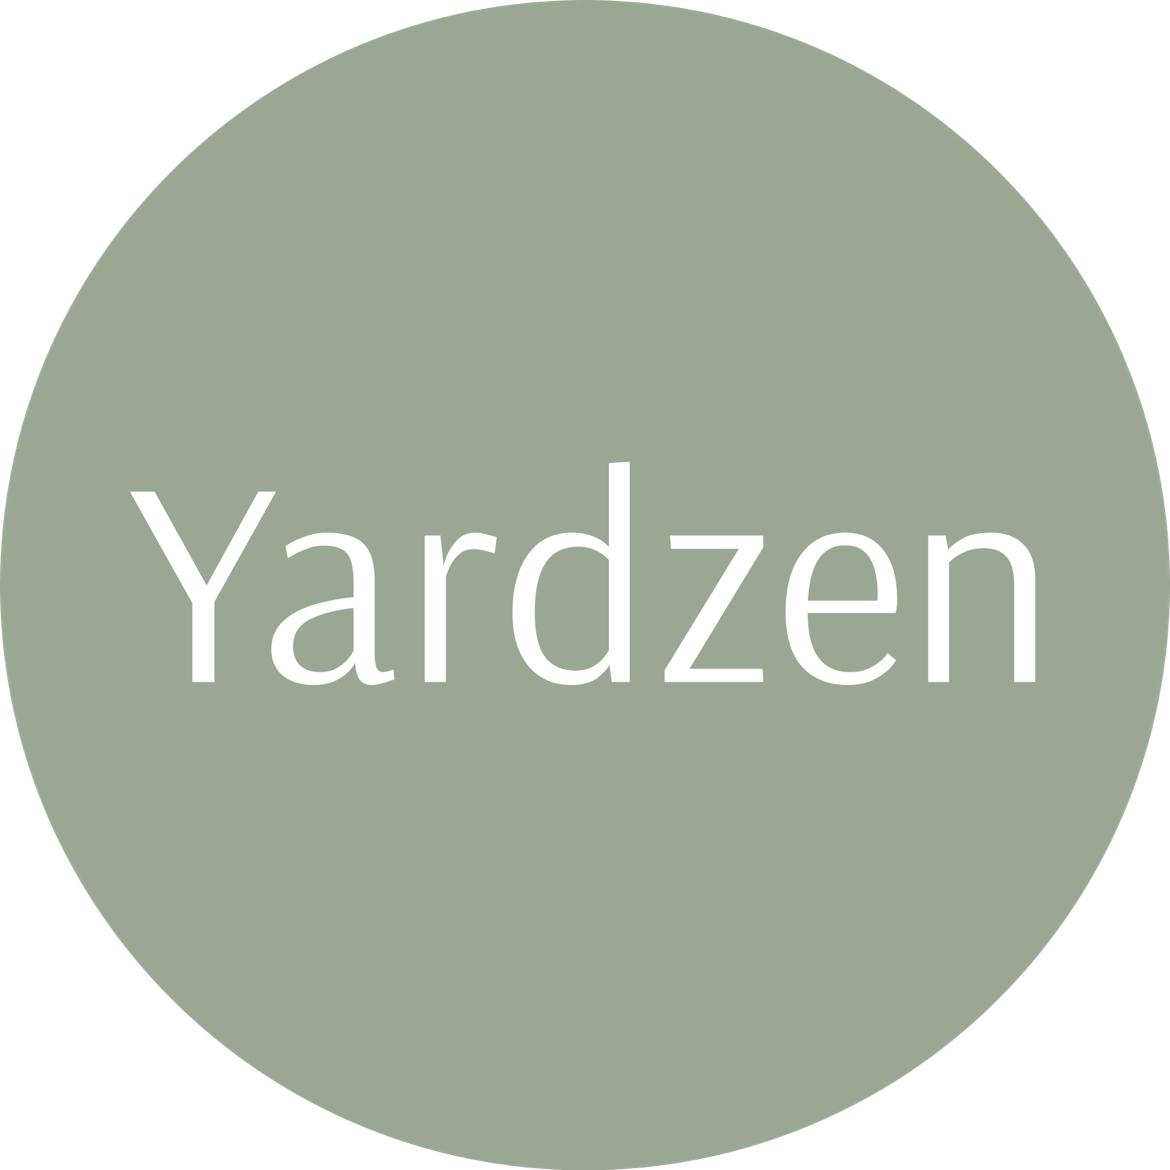 Yardzen's images